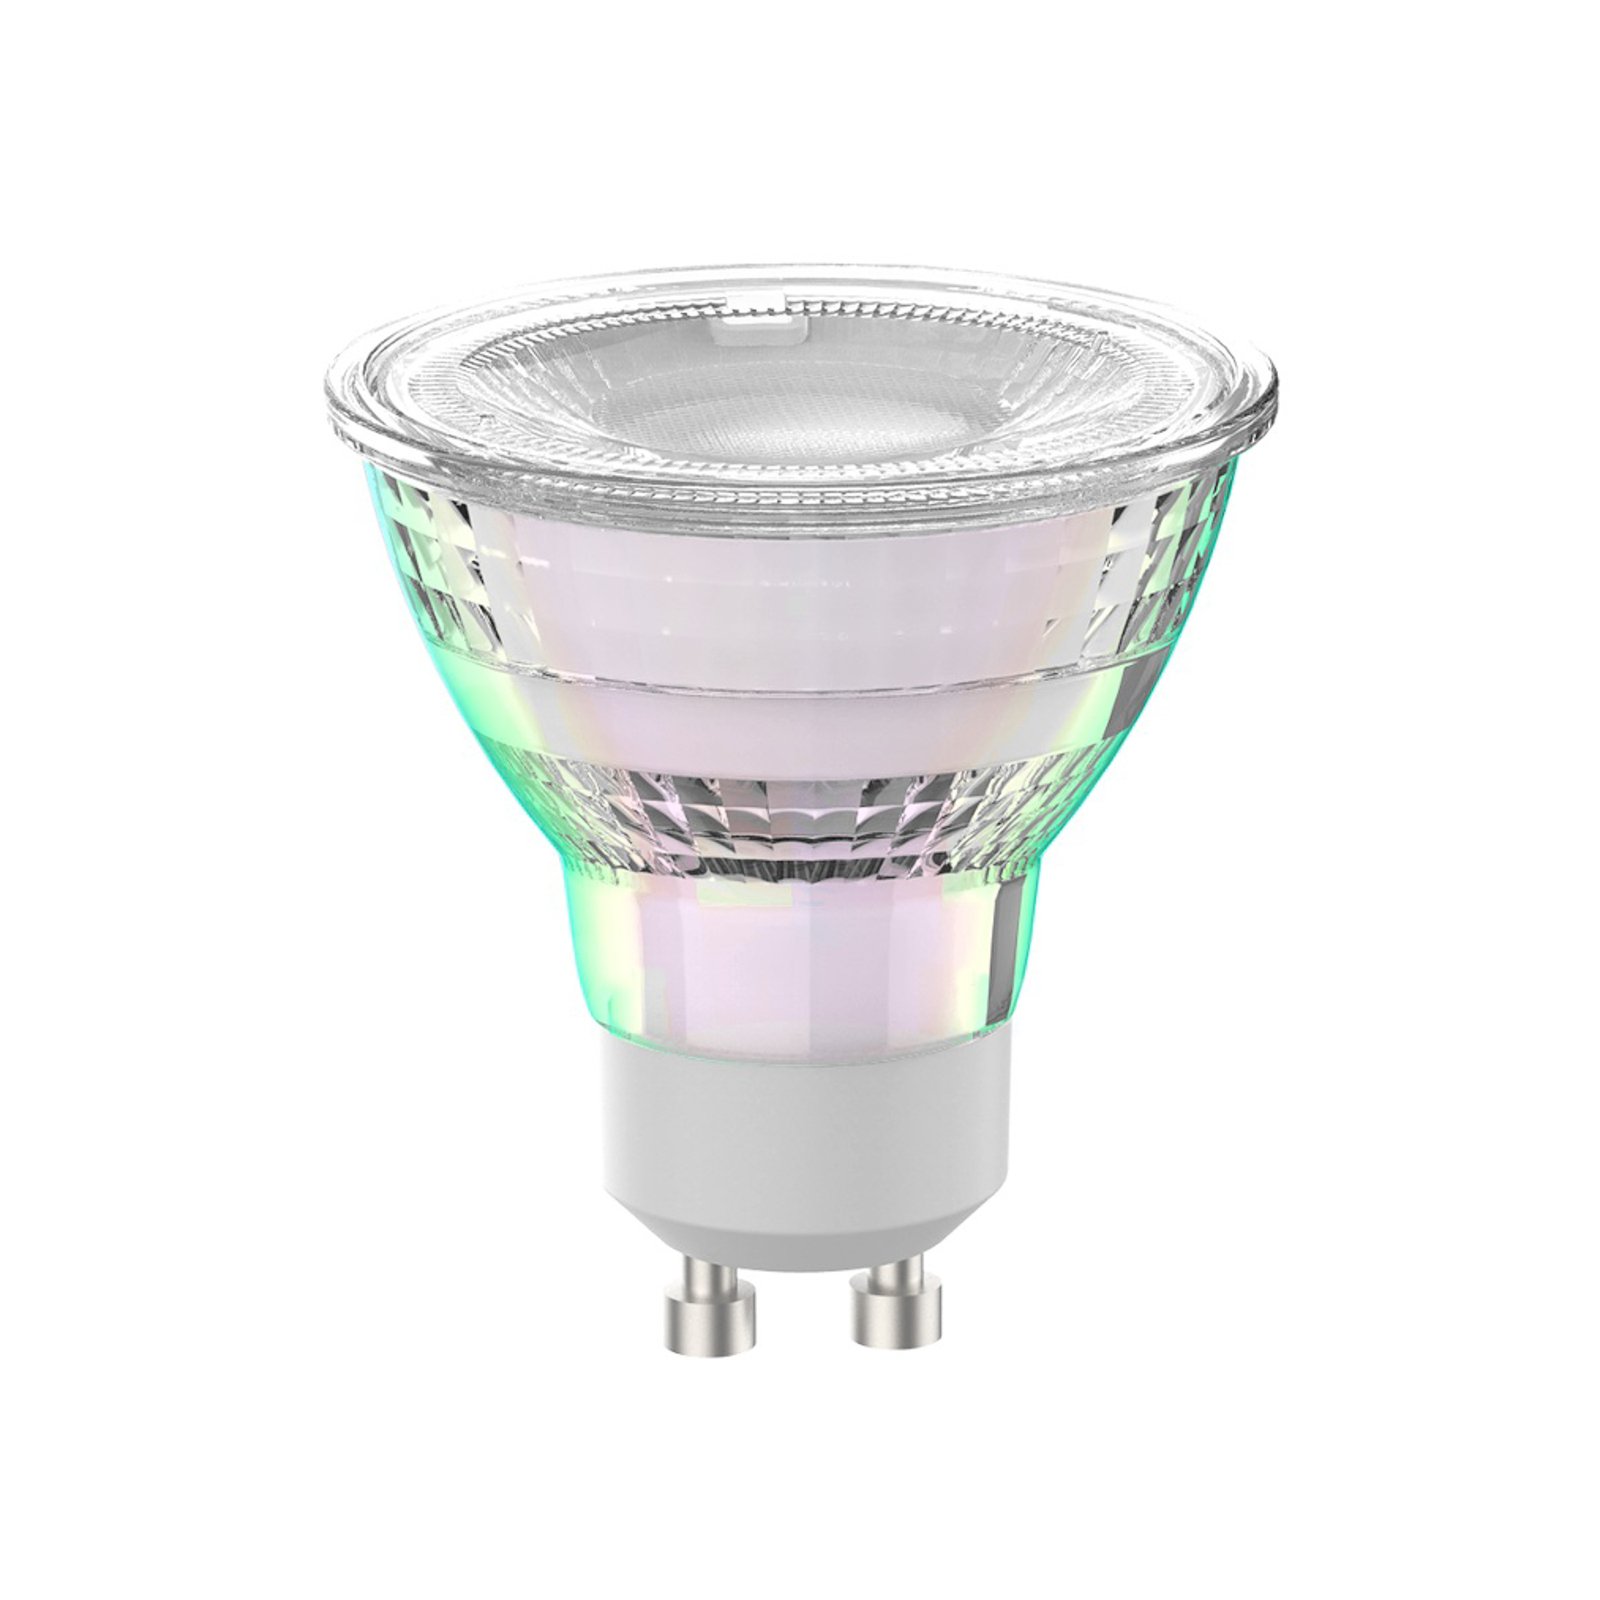 Żarówka LED Arcchio GU10 2,5W 6500K 450lm szklana zestaw 10 szt